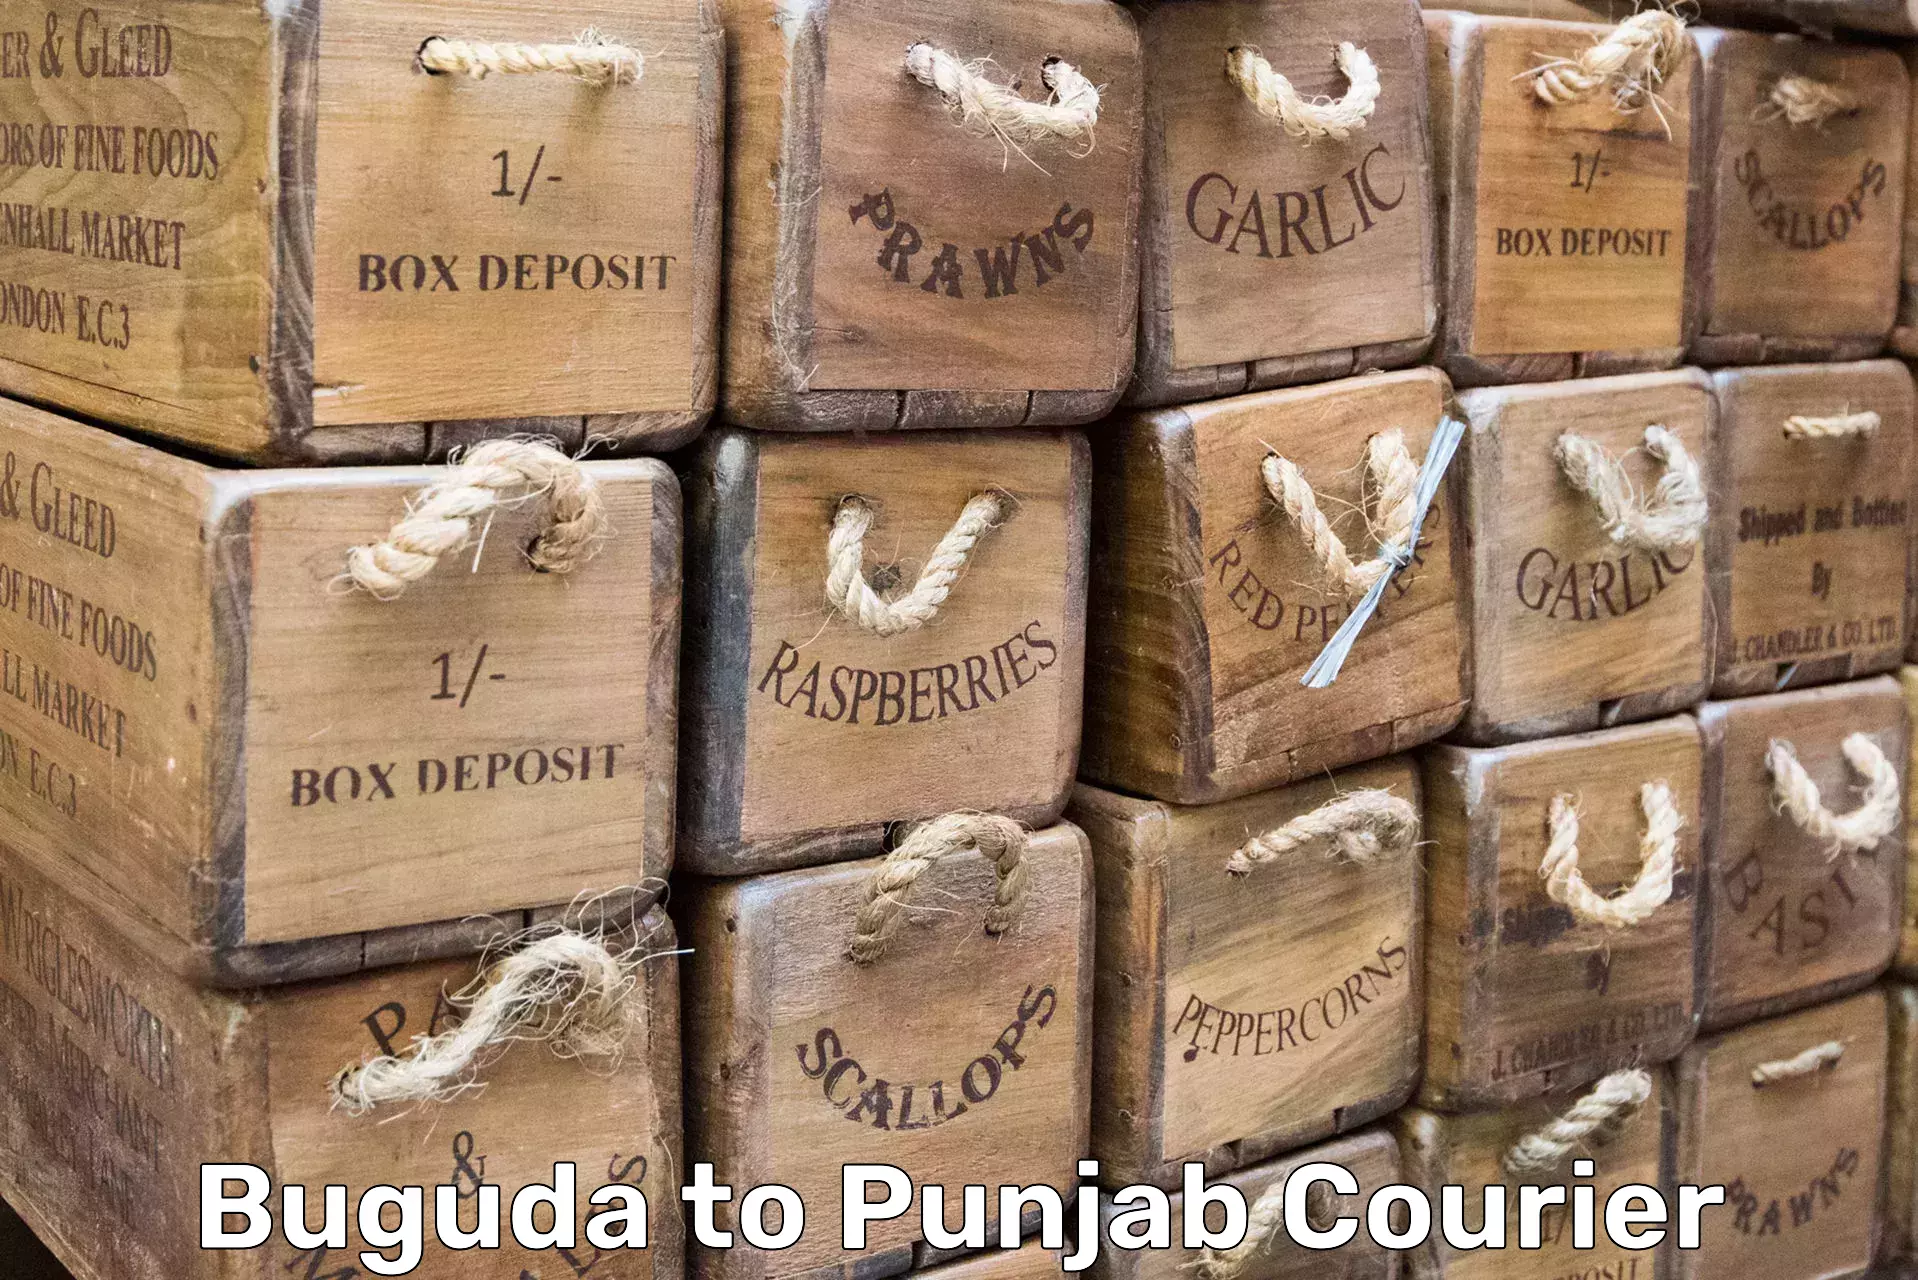 Budget-friendly movers Buguda to Punjab